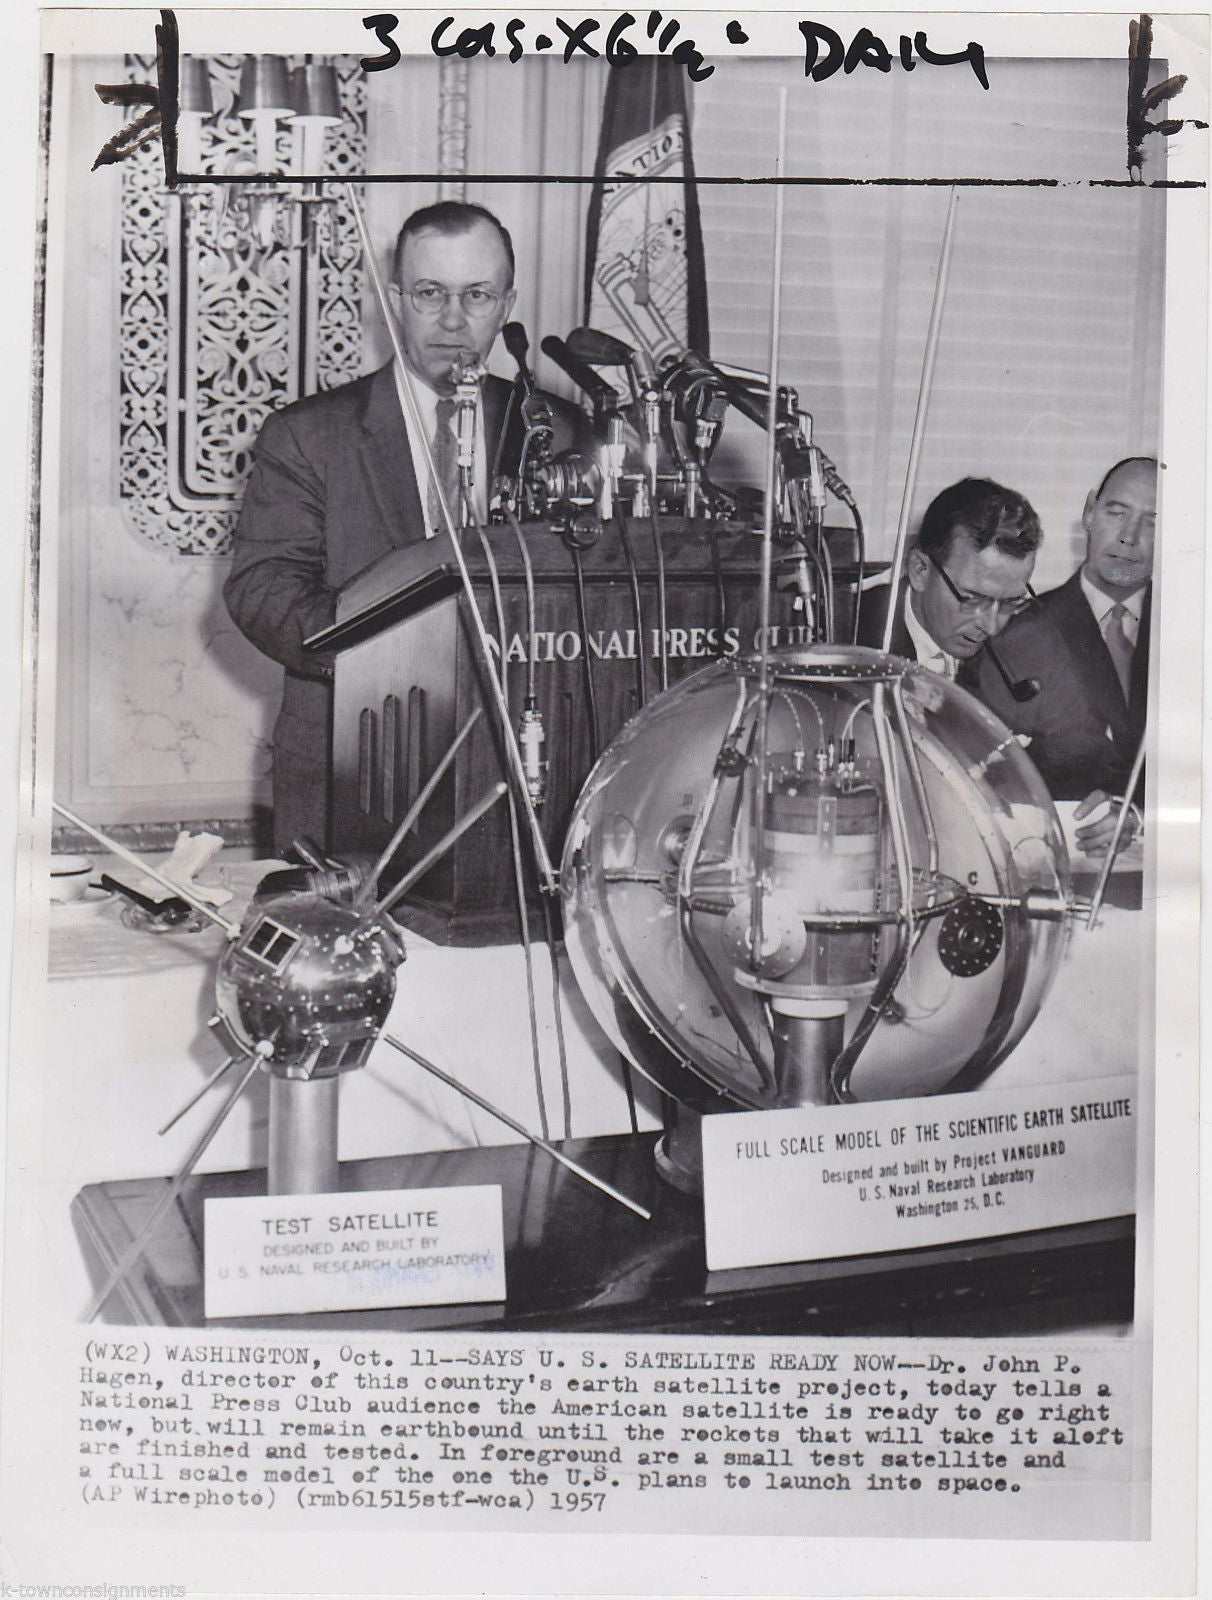 DR JOHN HAGEN FIRST US SPACE SATELLITE PROGRAM VINTAGE NEWS PRESS PHOTO - K-townConsignments